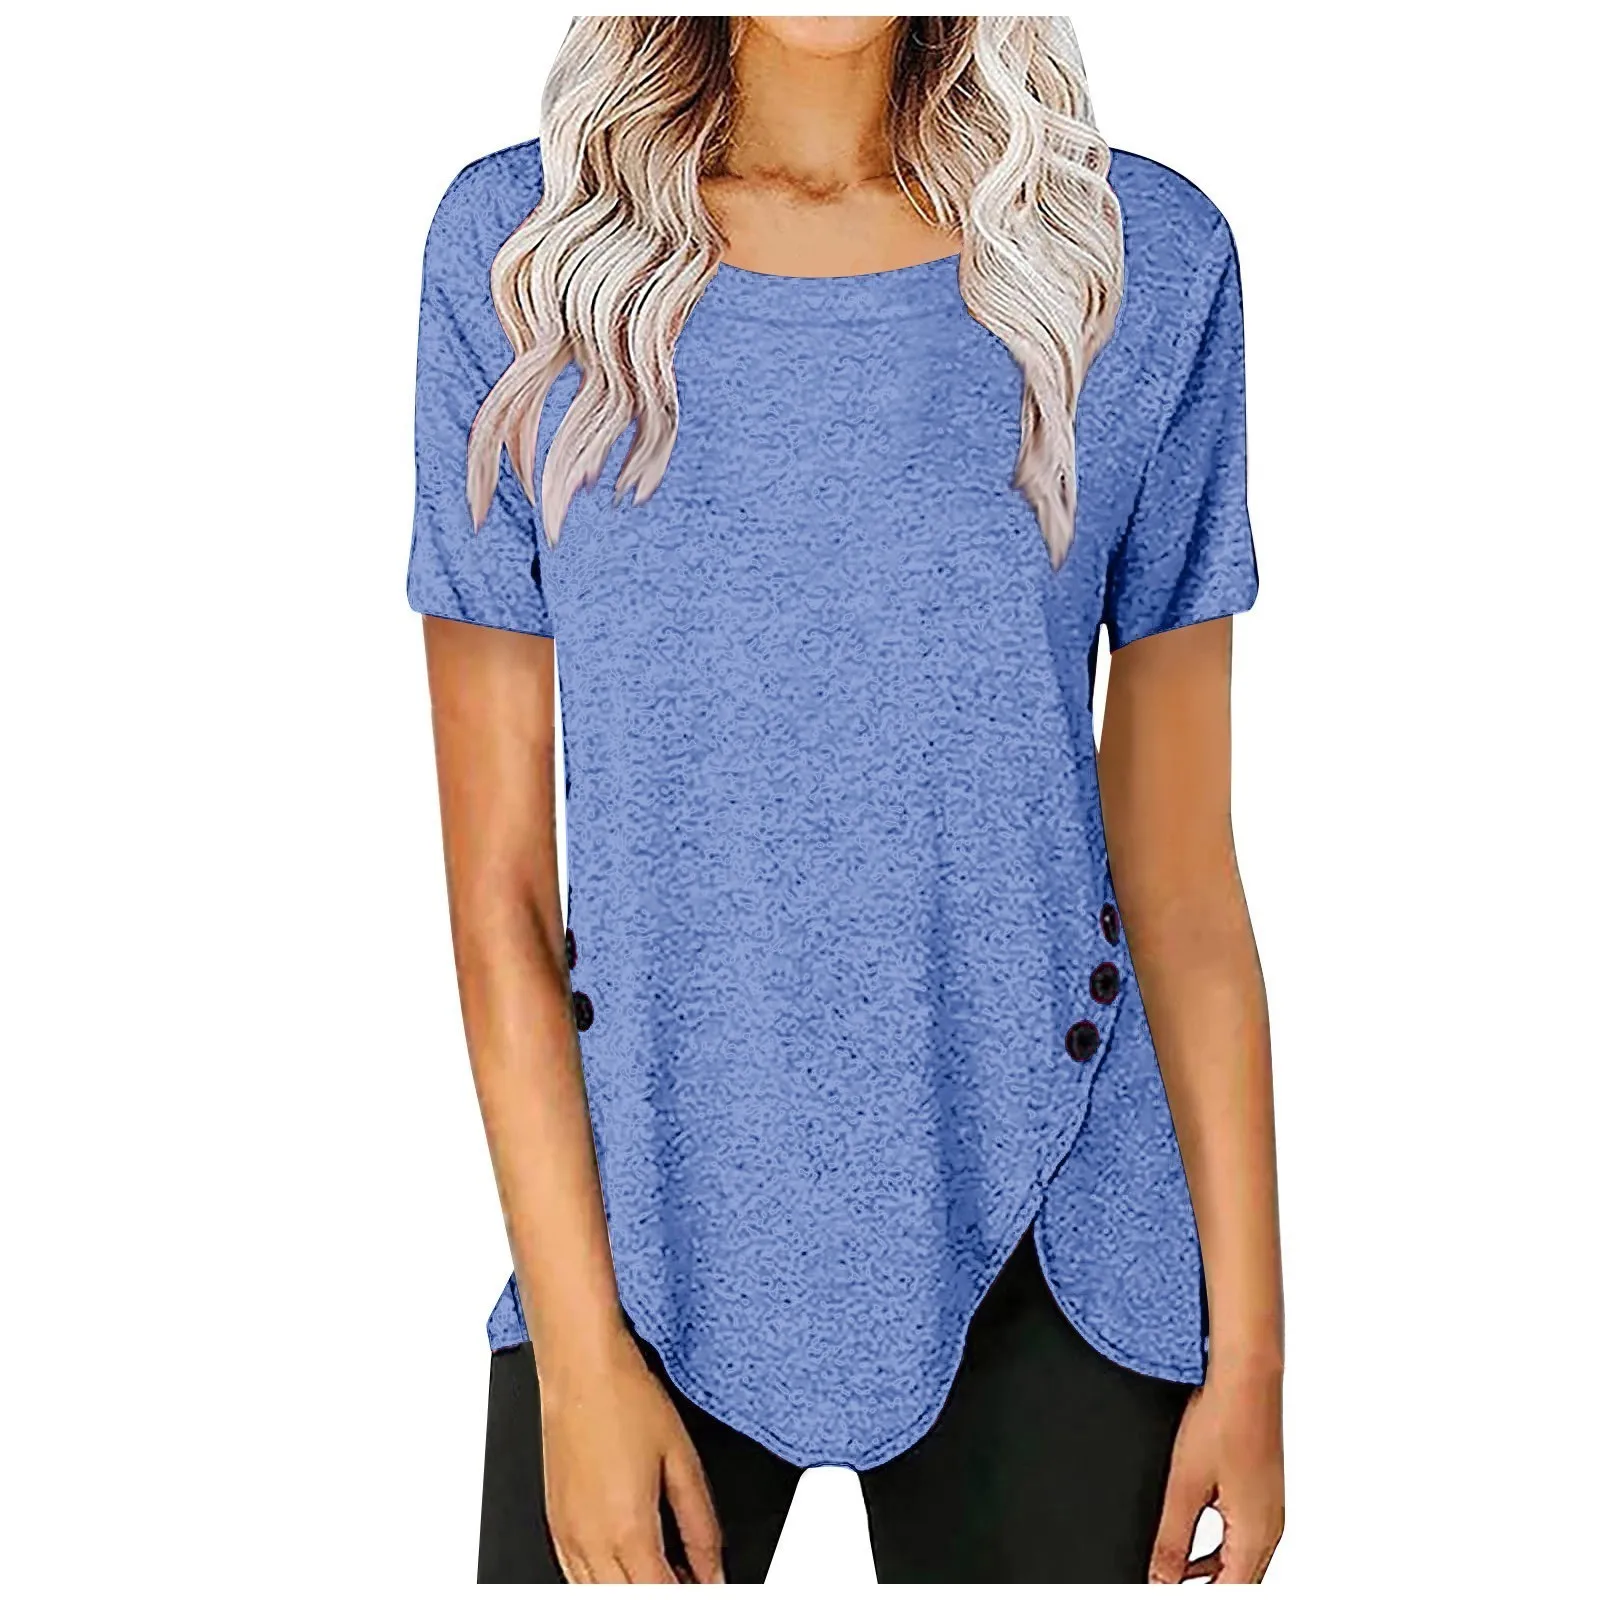 

Fashion Women's Casual Solid Color Short Sleeve Button Loose Top T-shirt Топы больших размеров plus size oberteile 플러스사이즈 상의